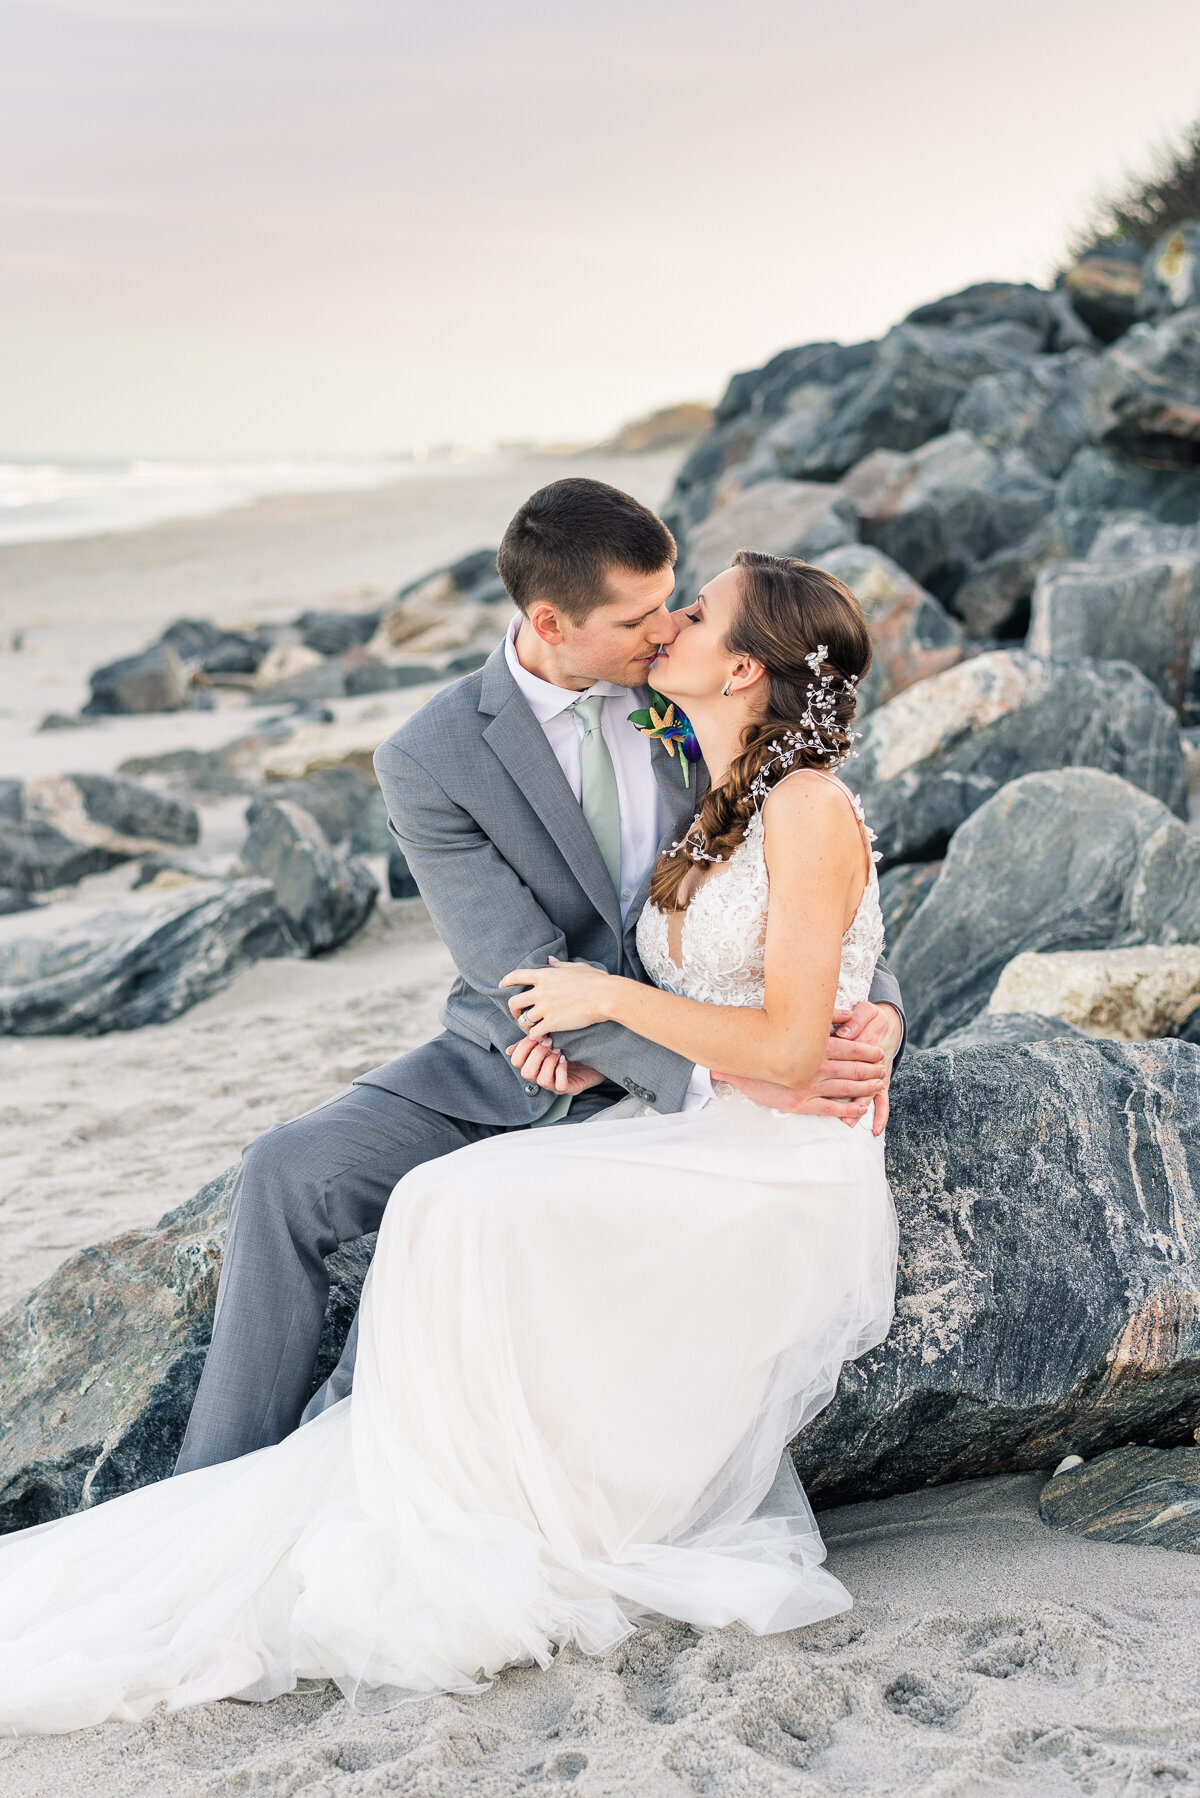 Matt & Brittany Tides Wedding Couples Portrait | Lisa Marshall Photography